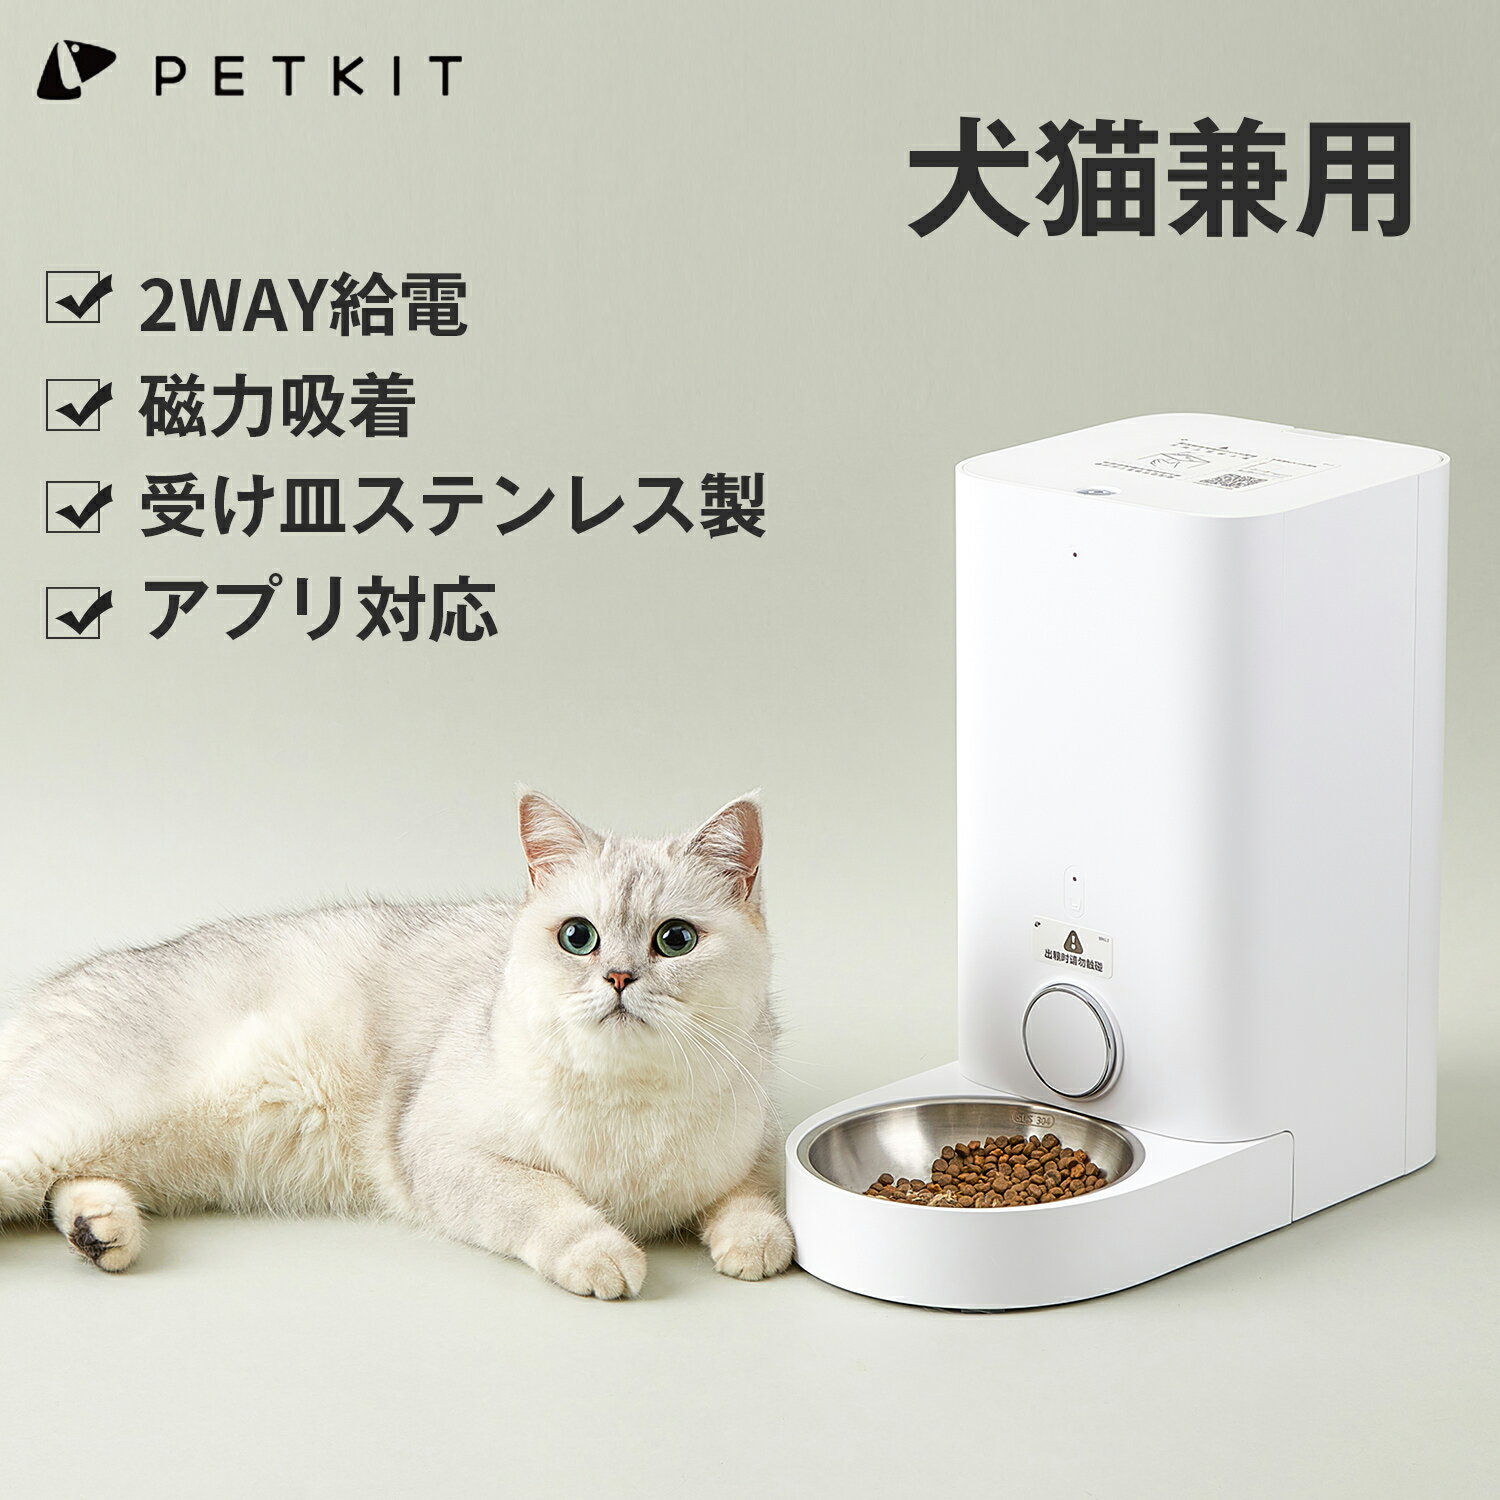 PETKIT 自動給餌器 猫 中小型犬用 給餌器 自動給餌機 ステンレス製 ペットキット 2.8L 自動餌やり機 肥満が気になる猫用 スマホ操作 2WAY給電 猫 食器 大容量 定時定量 タイマー式 コンセント/…